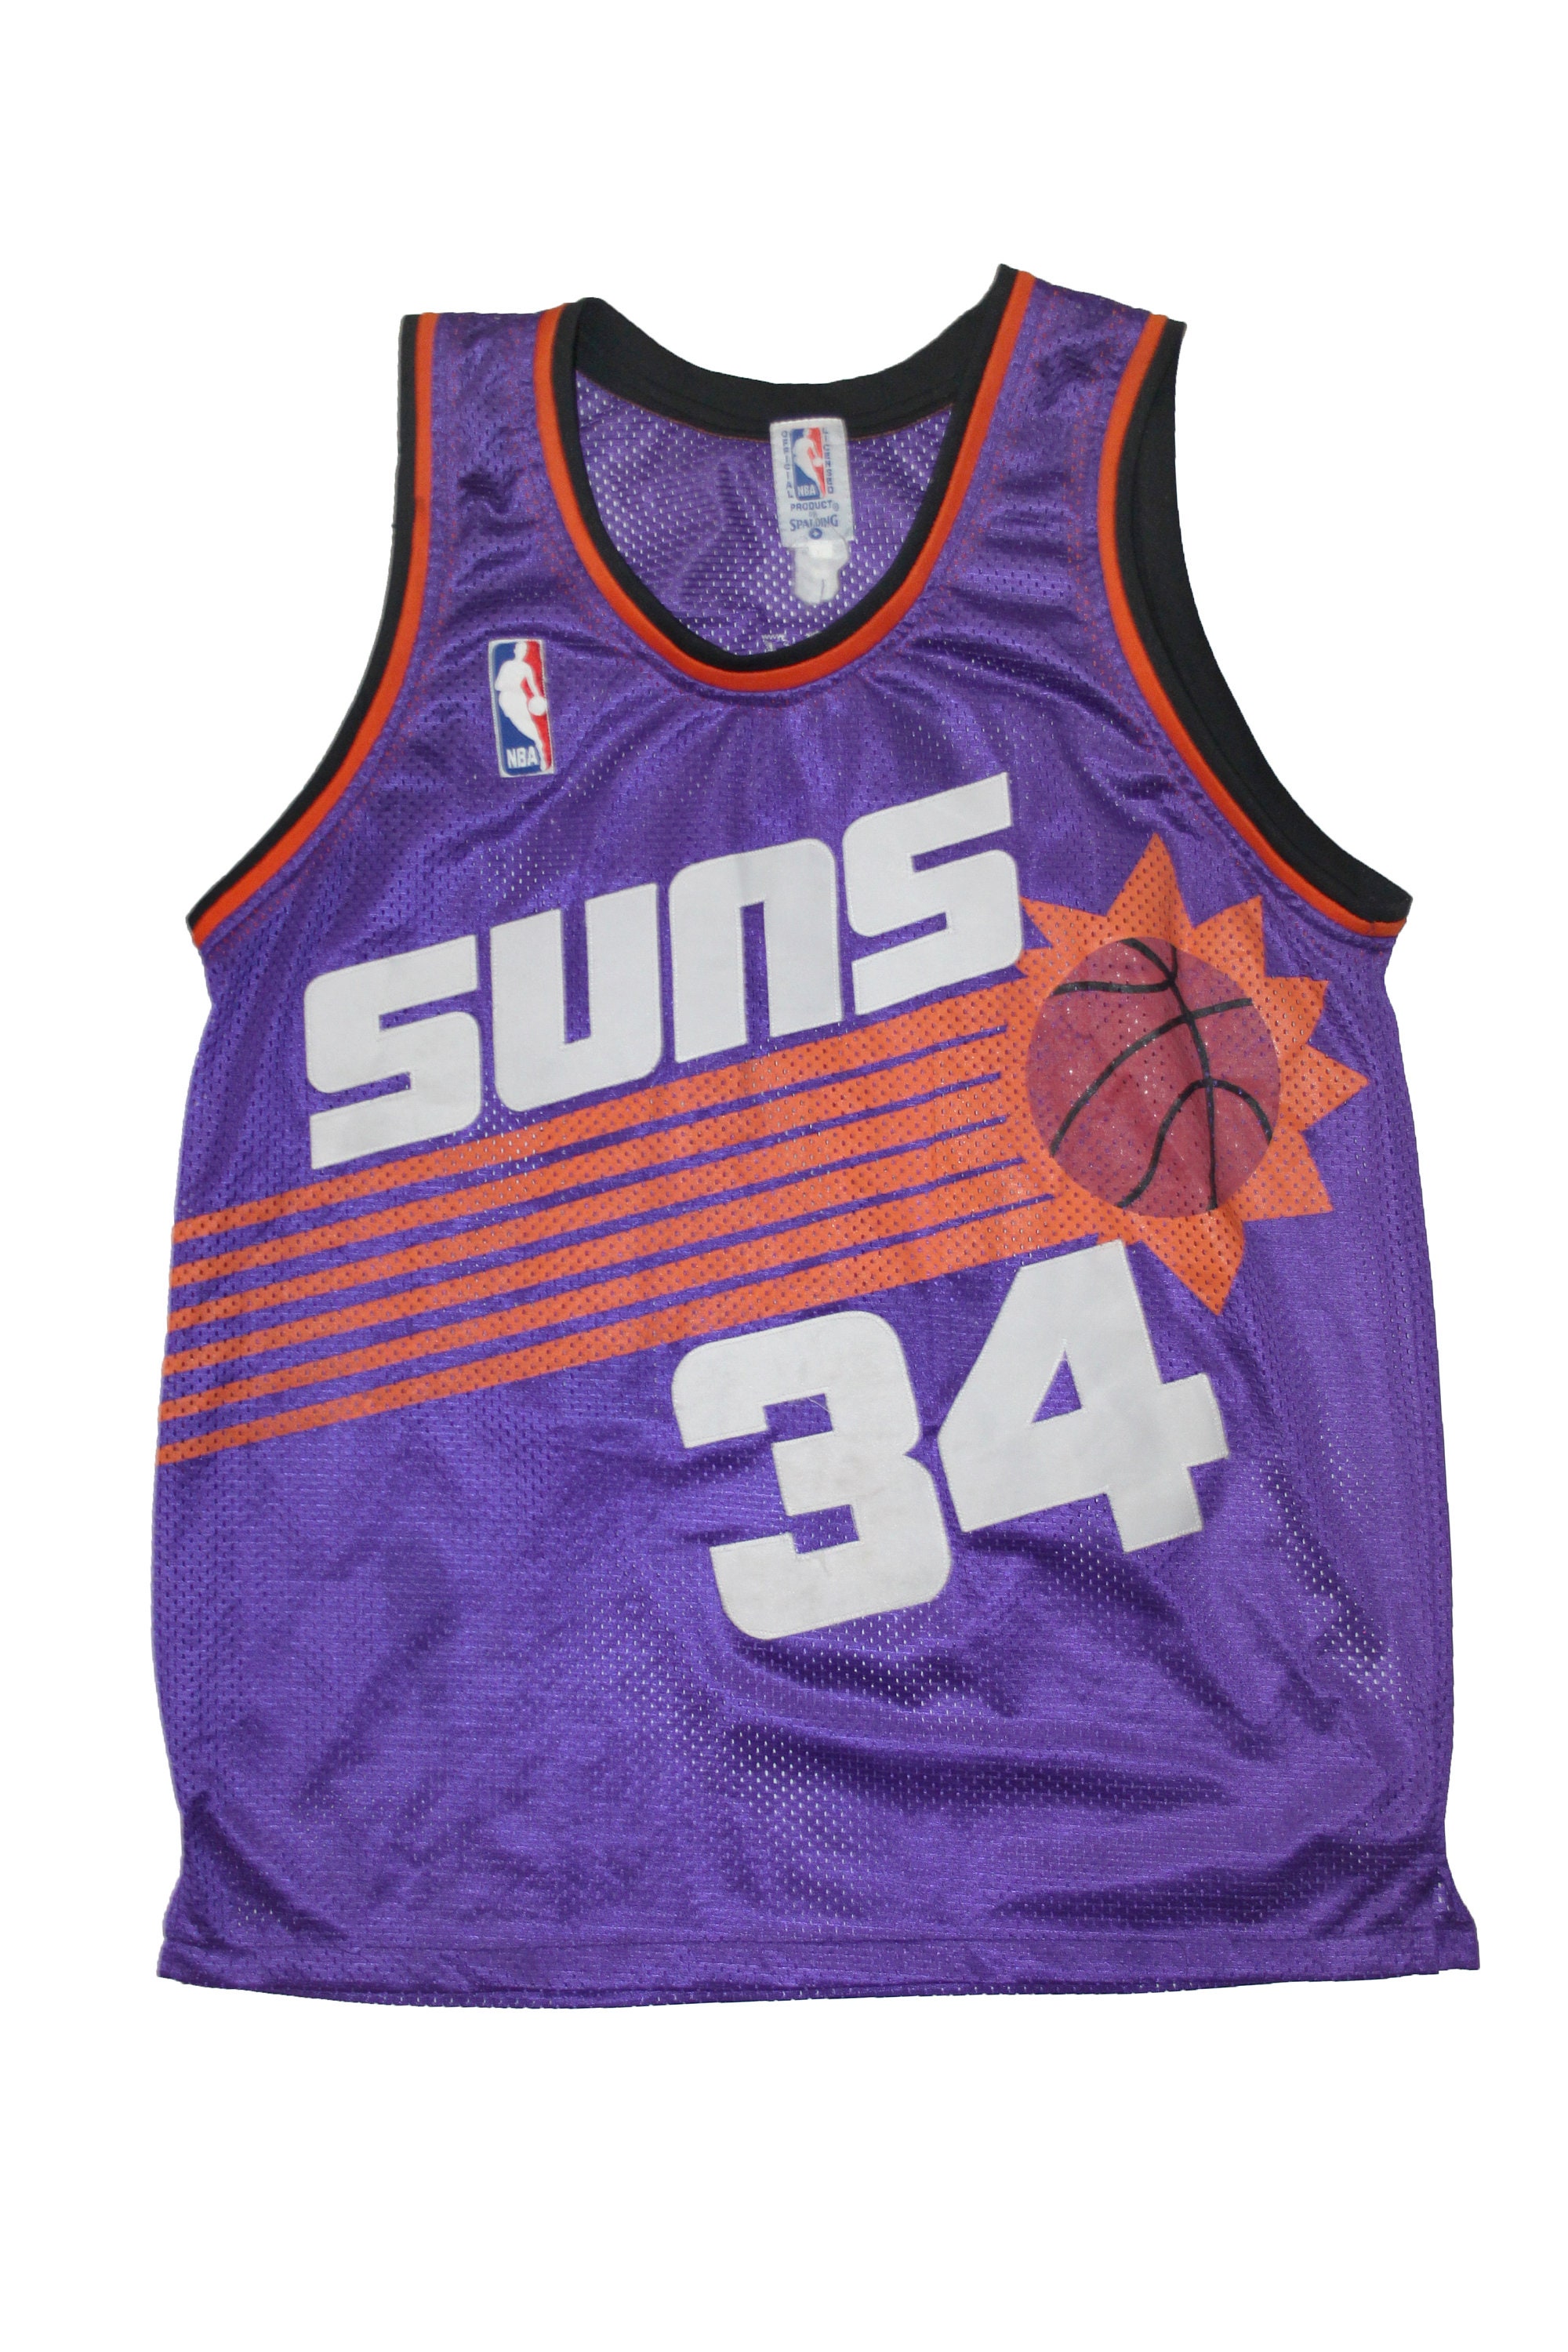 Charles Barkley Phoenix Suns Signed Autographed Purple #34 Jersey